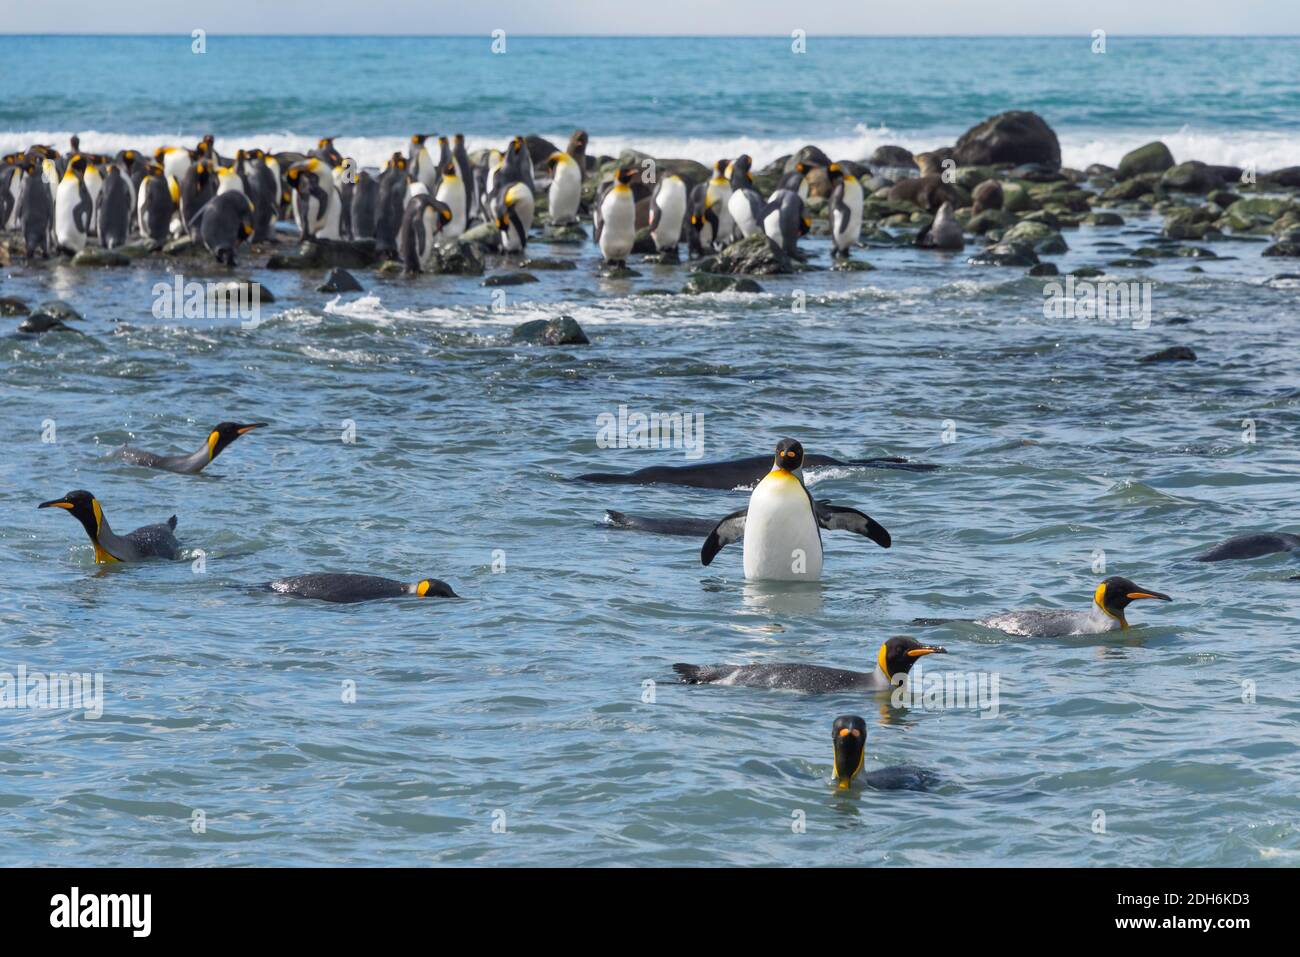 King Penguins swimming in the ocean, Gold Harbor, South Georgia, Antarctica Stock Photo